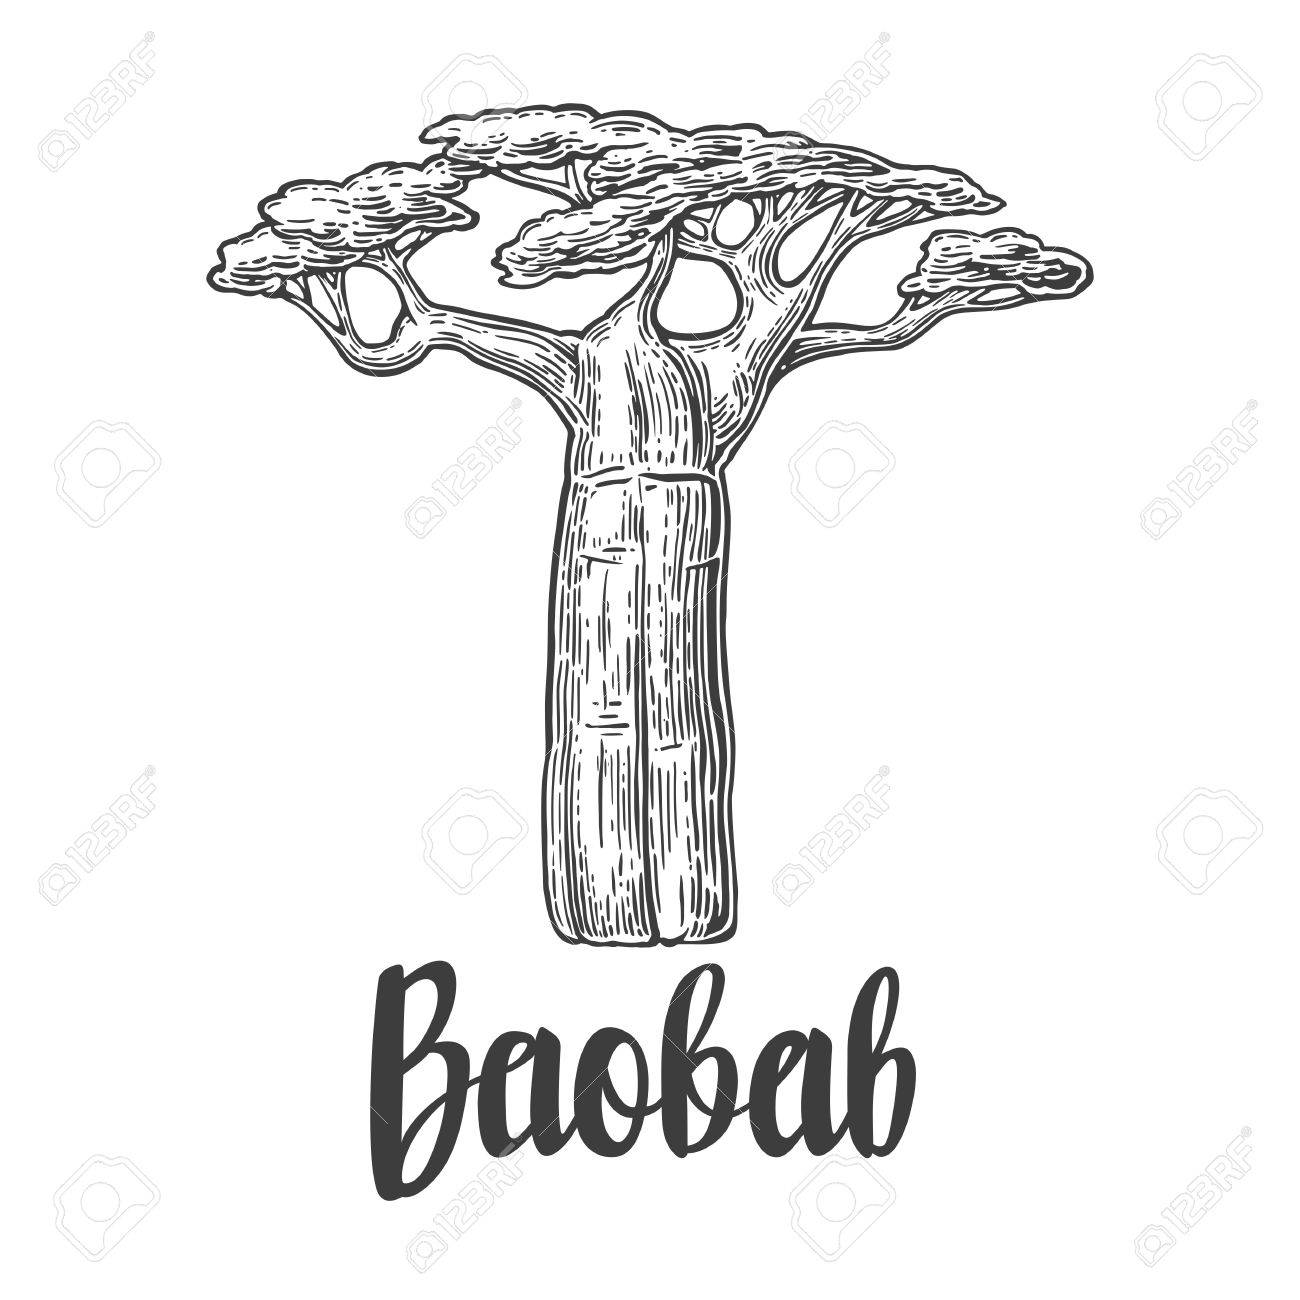 Baobab Tree Vector Vintage Engraved Illustration On White